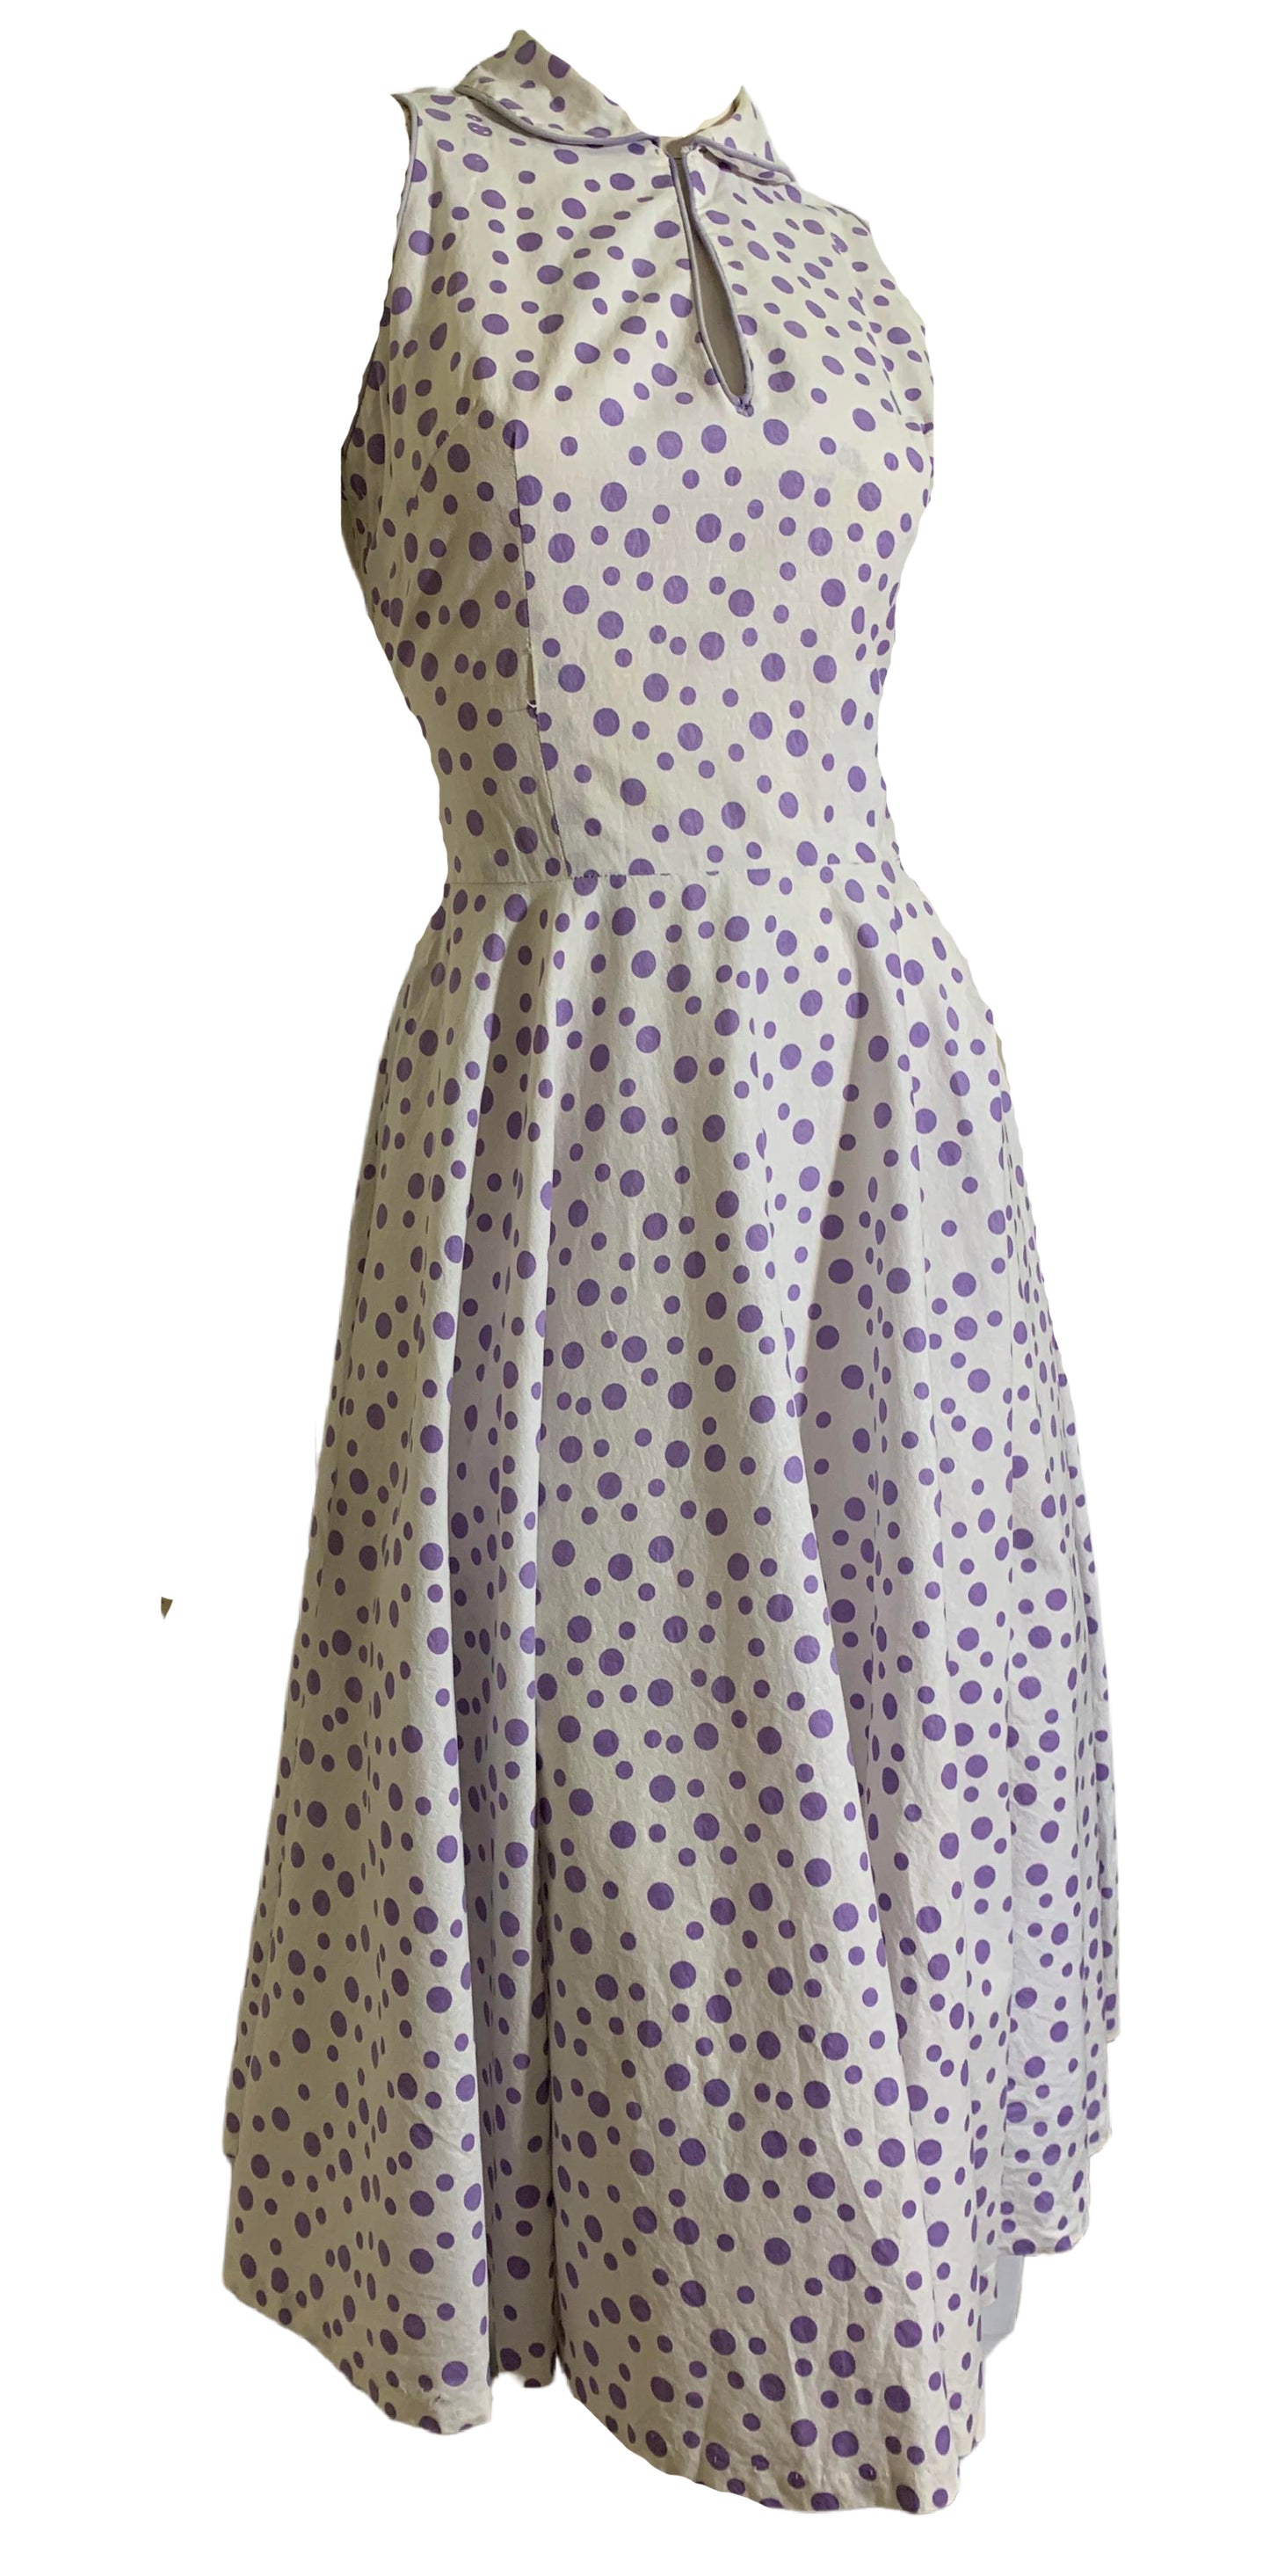 Lavender Polka Dot Sleeveless Circle Skirt Dress circa 1940s